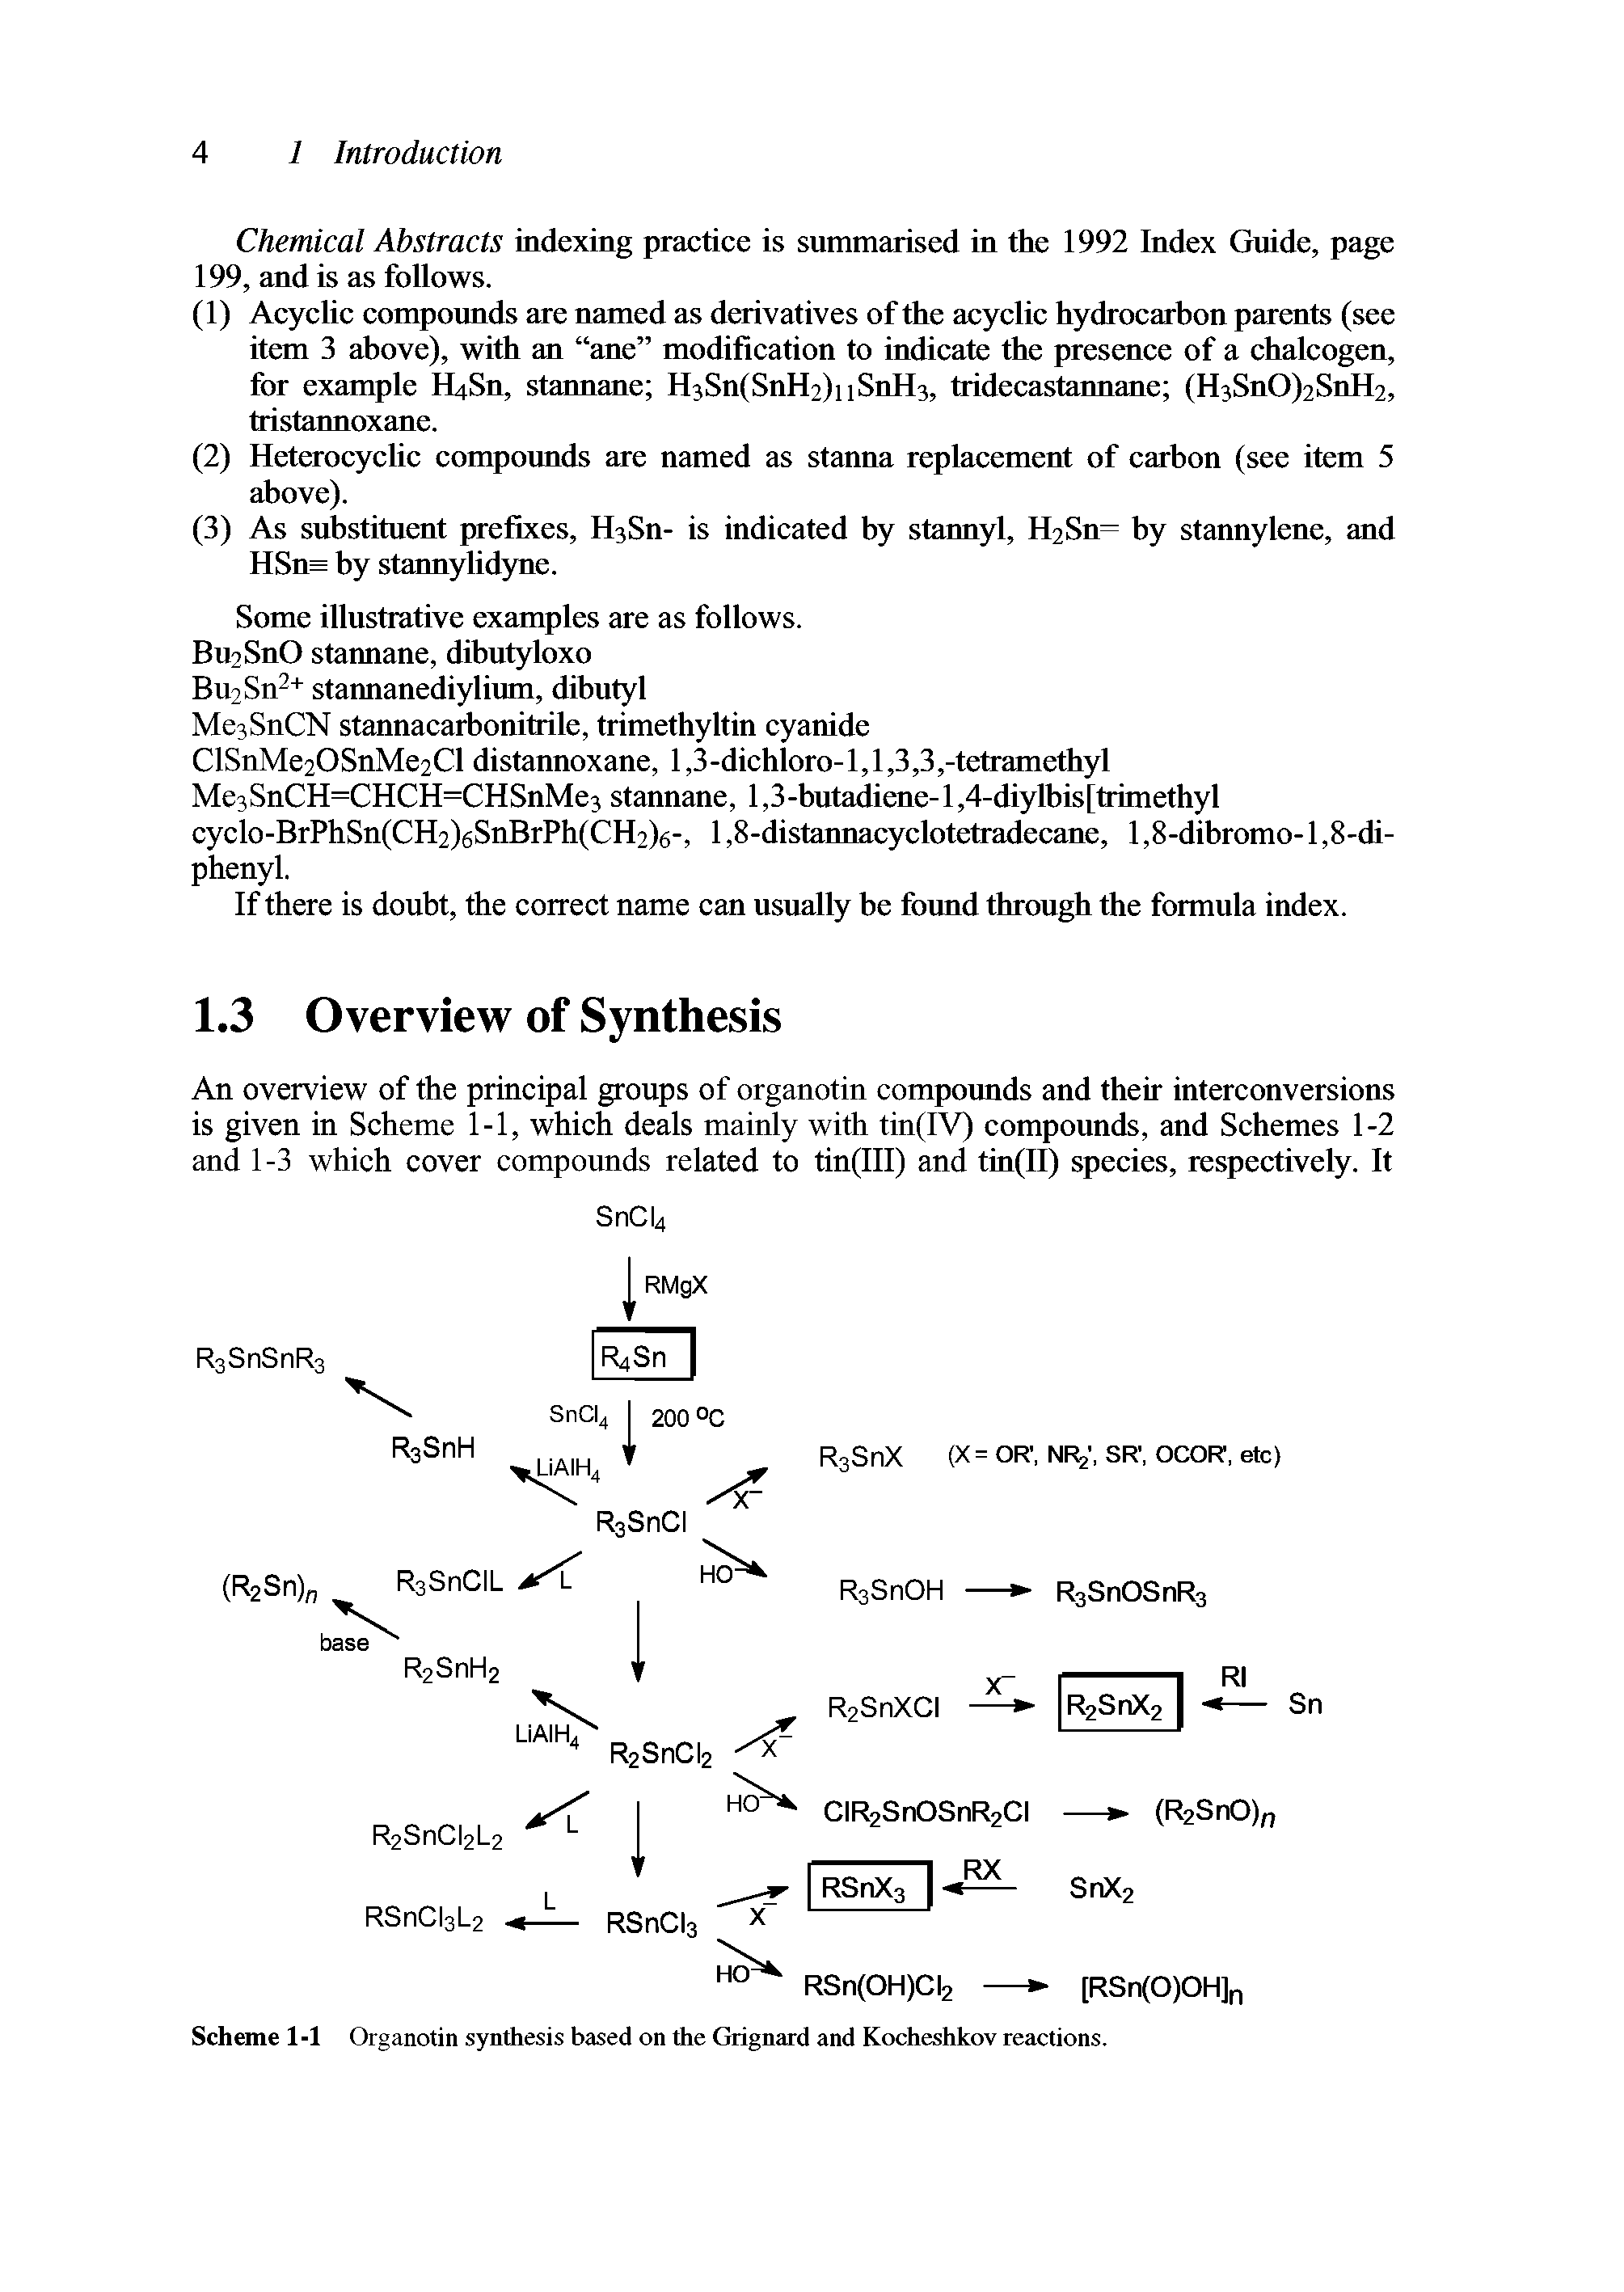 Scheme 1-1 Organotin synthesis based on die Grignard and Kocheshkov reactions.